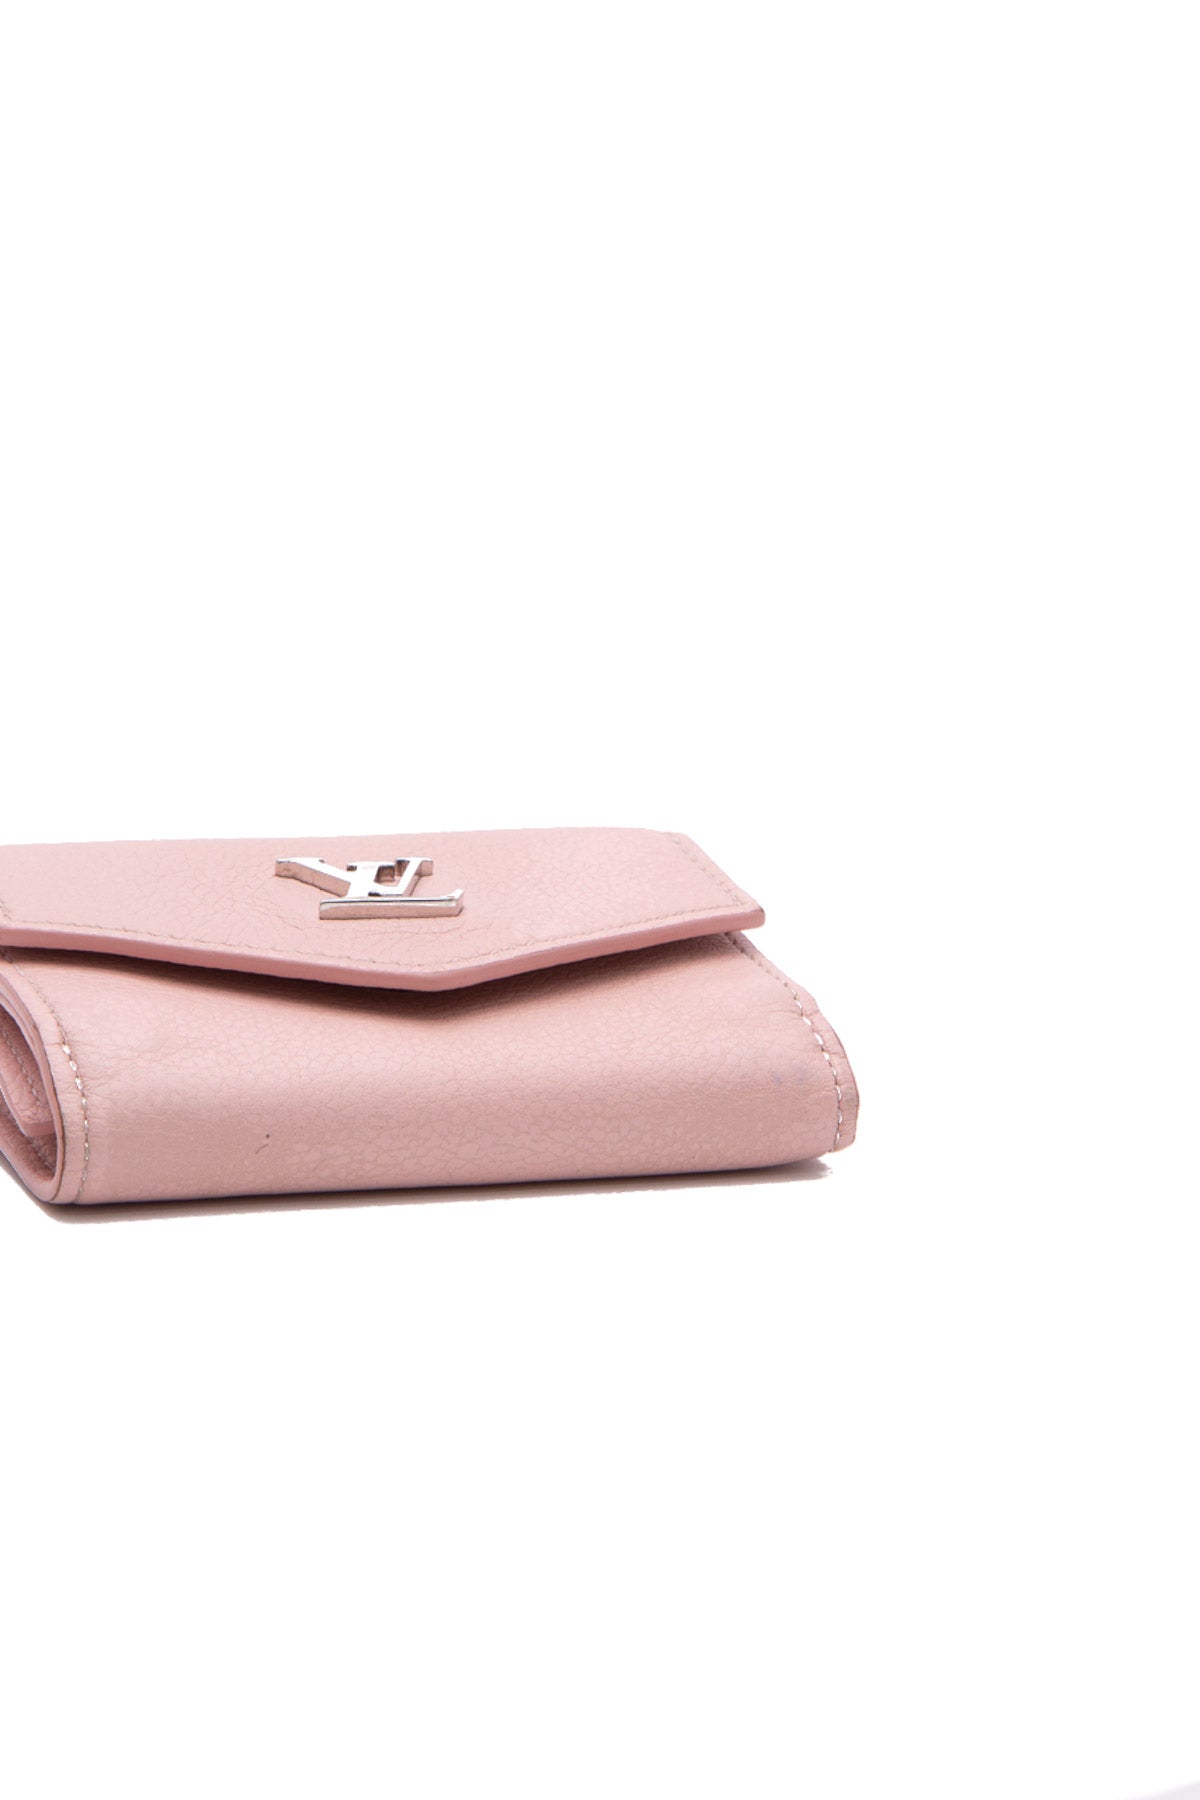 Louis Vuitton, Bags, Lockmini Wallet